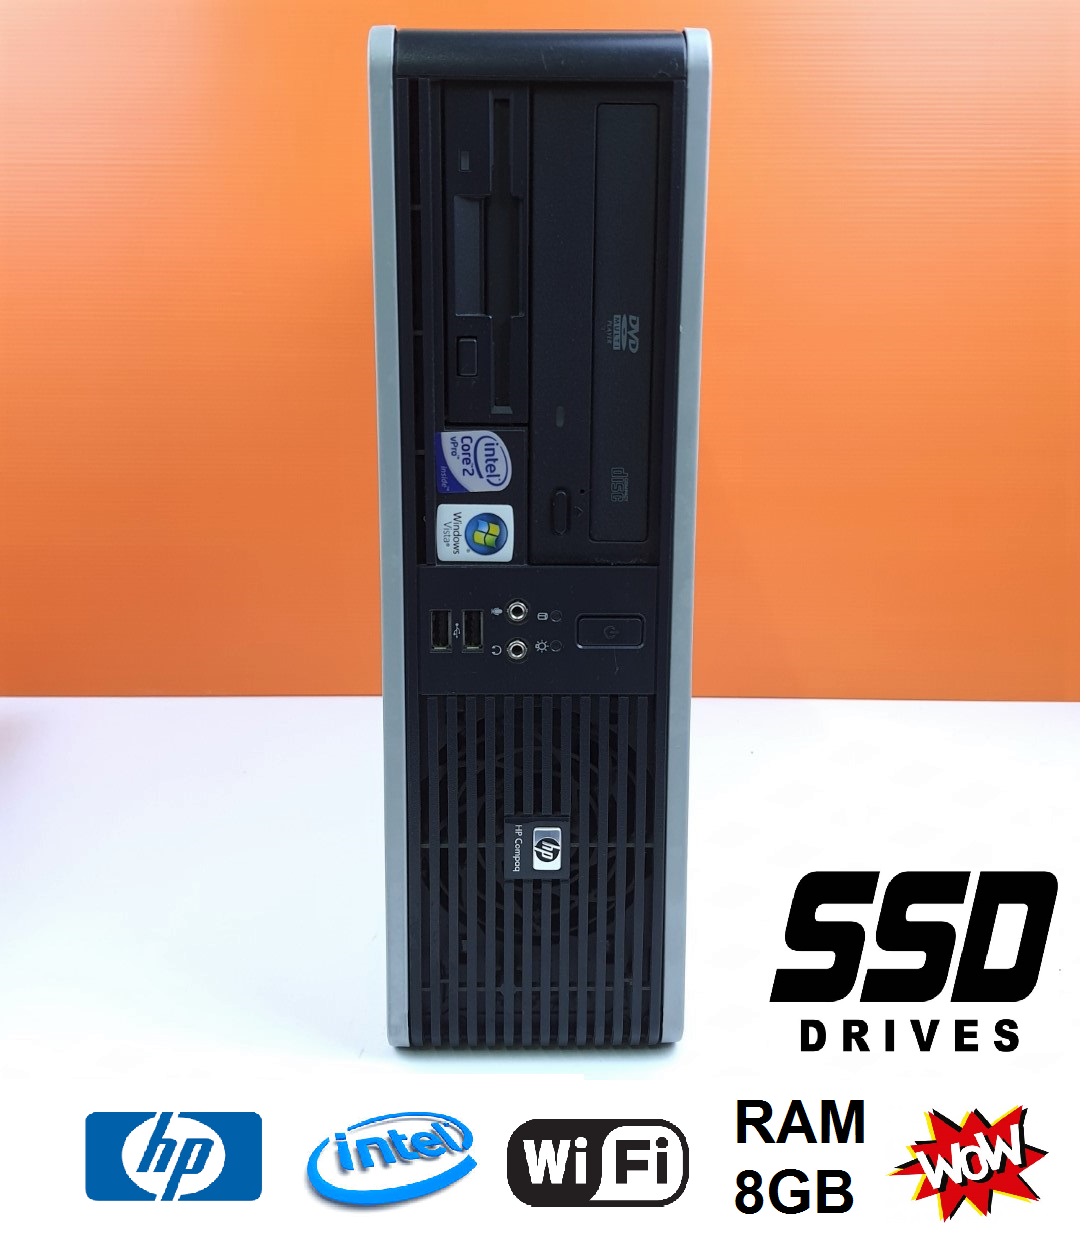 HP Compaq dc7900 Small Form Factor-CPU intel E8400 3.0GHz -RAM 8GB -HDD SSD 120GB -Wi-Fi